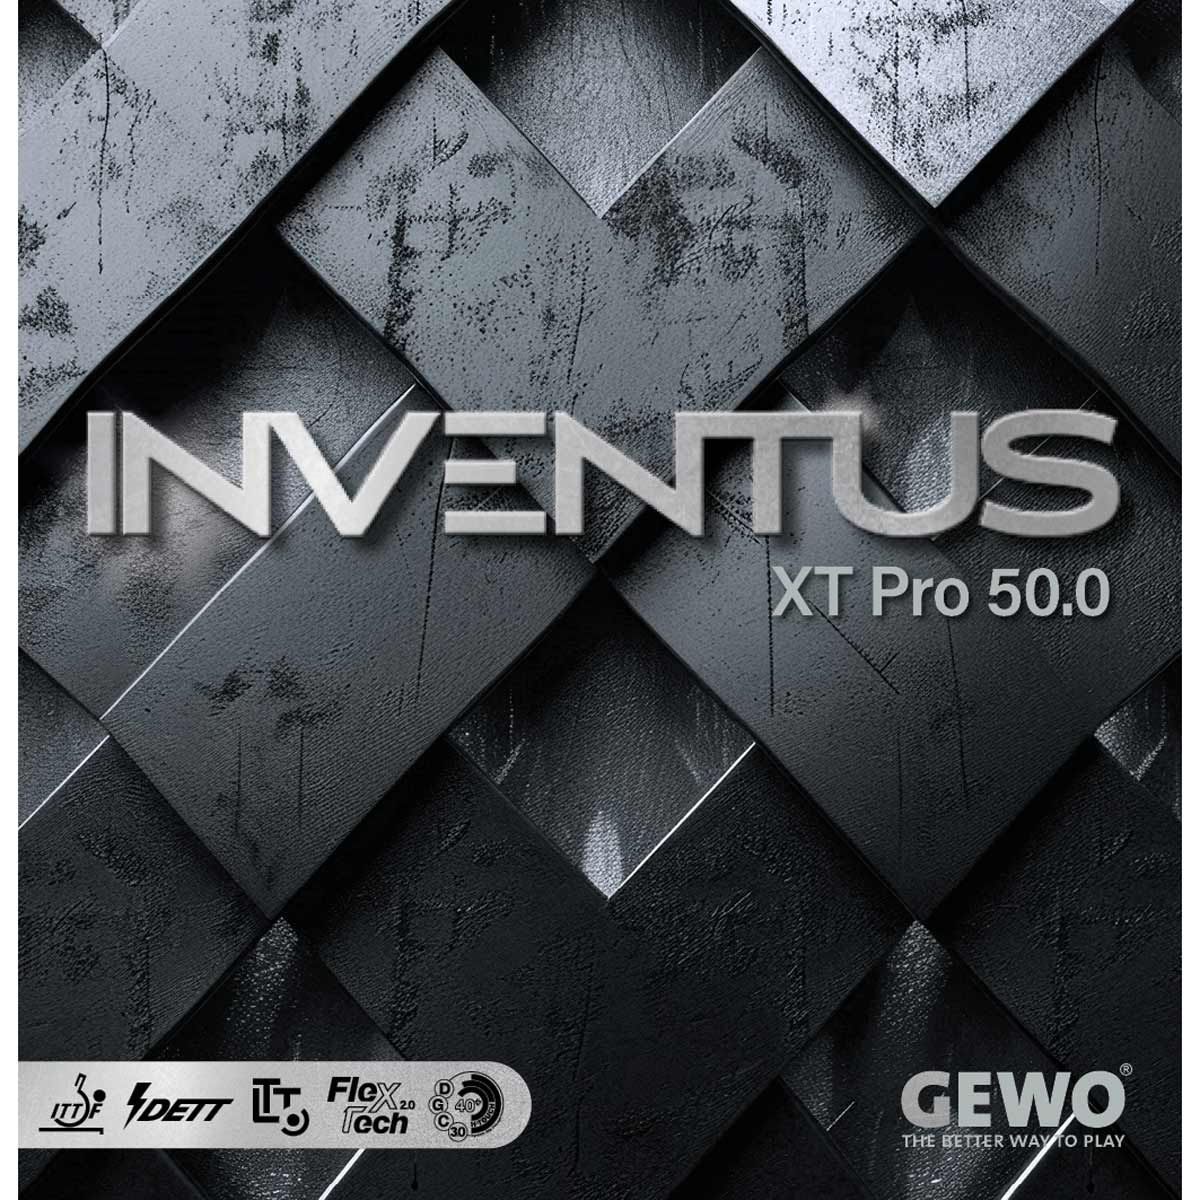 GEWO Inventus XT Pro 50.0 - Table Tennis Rubber